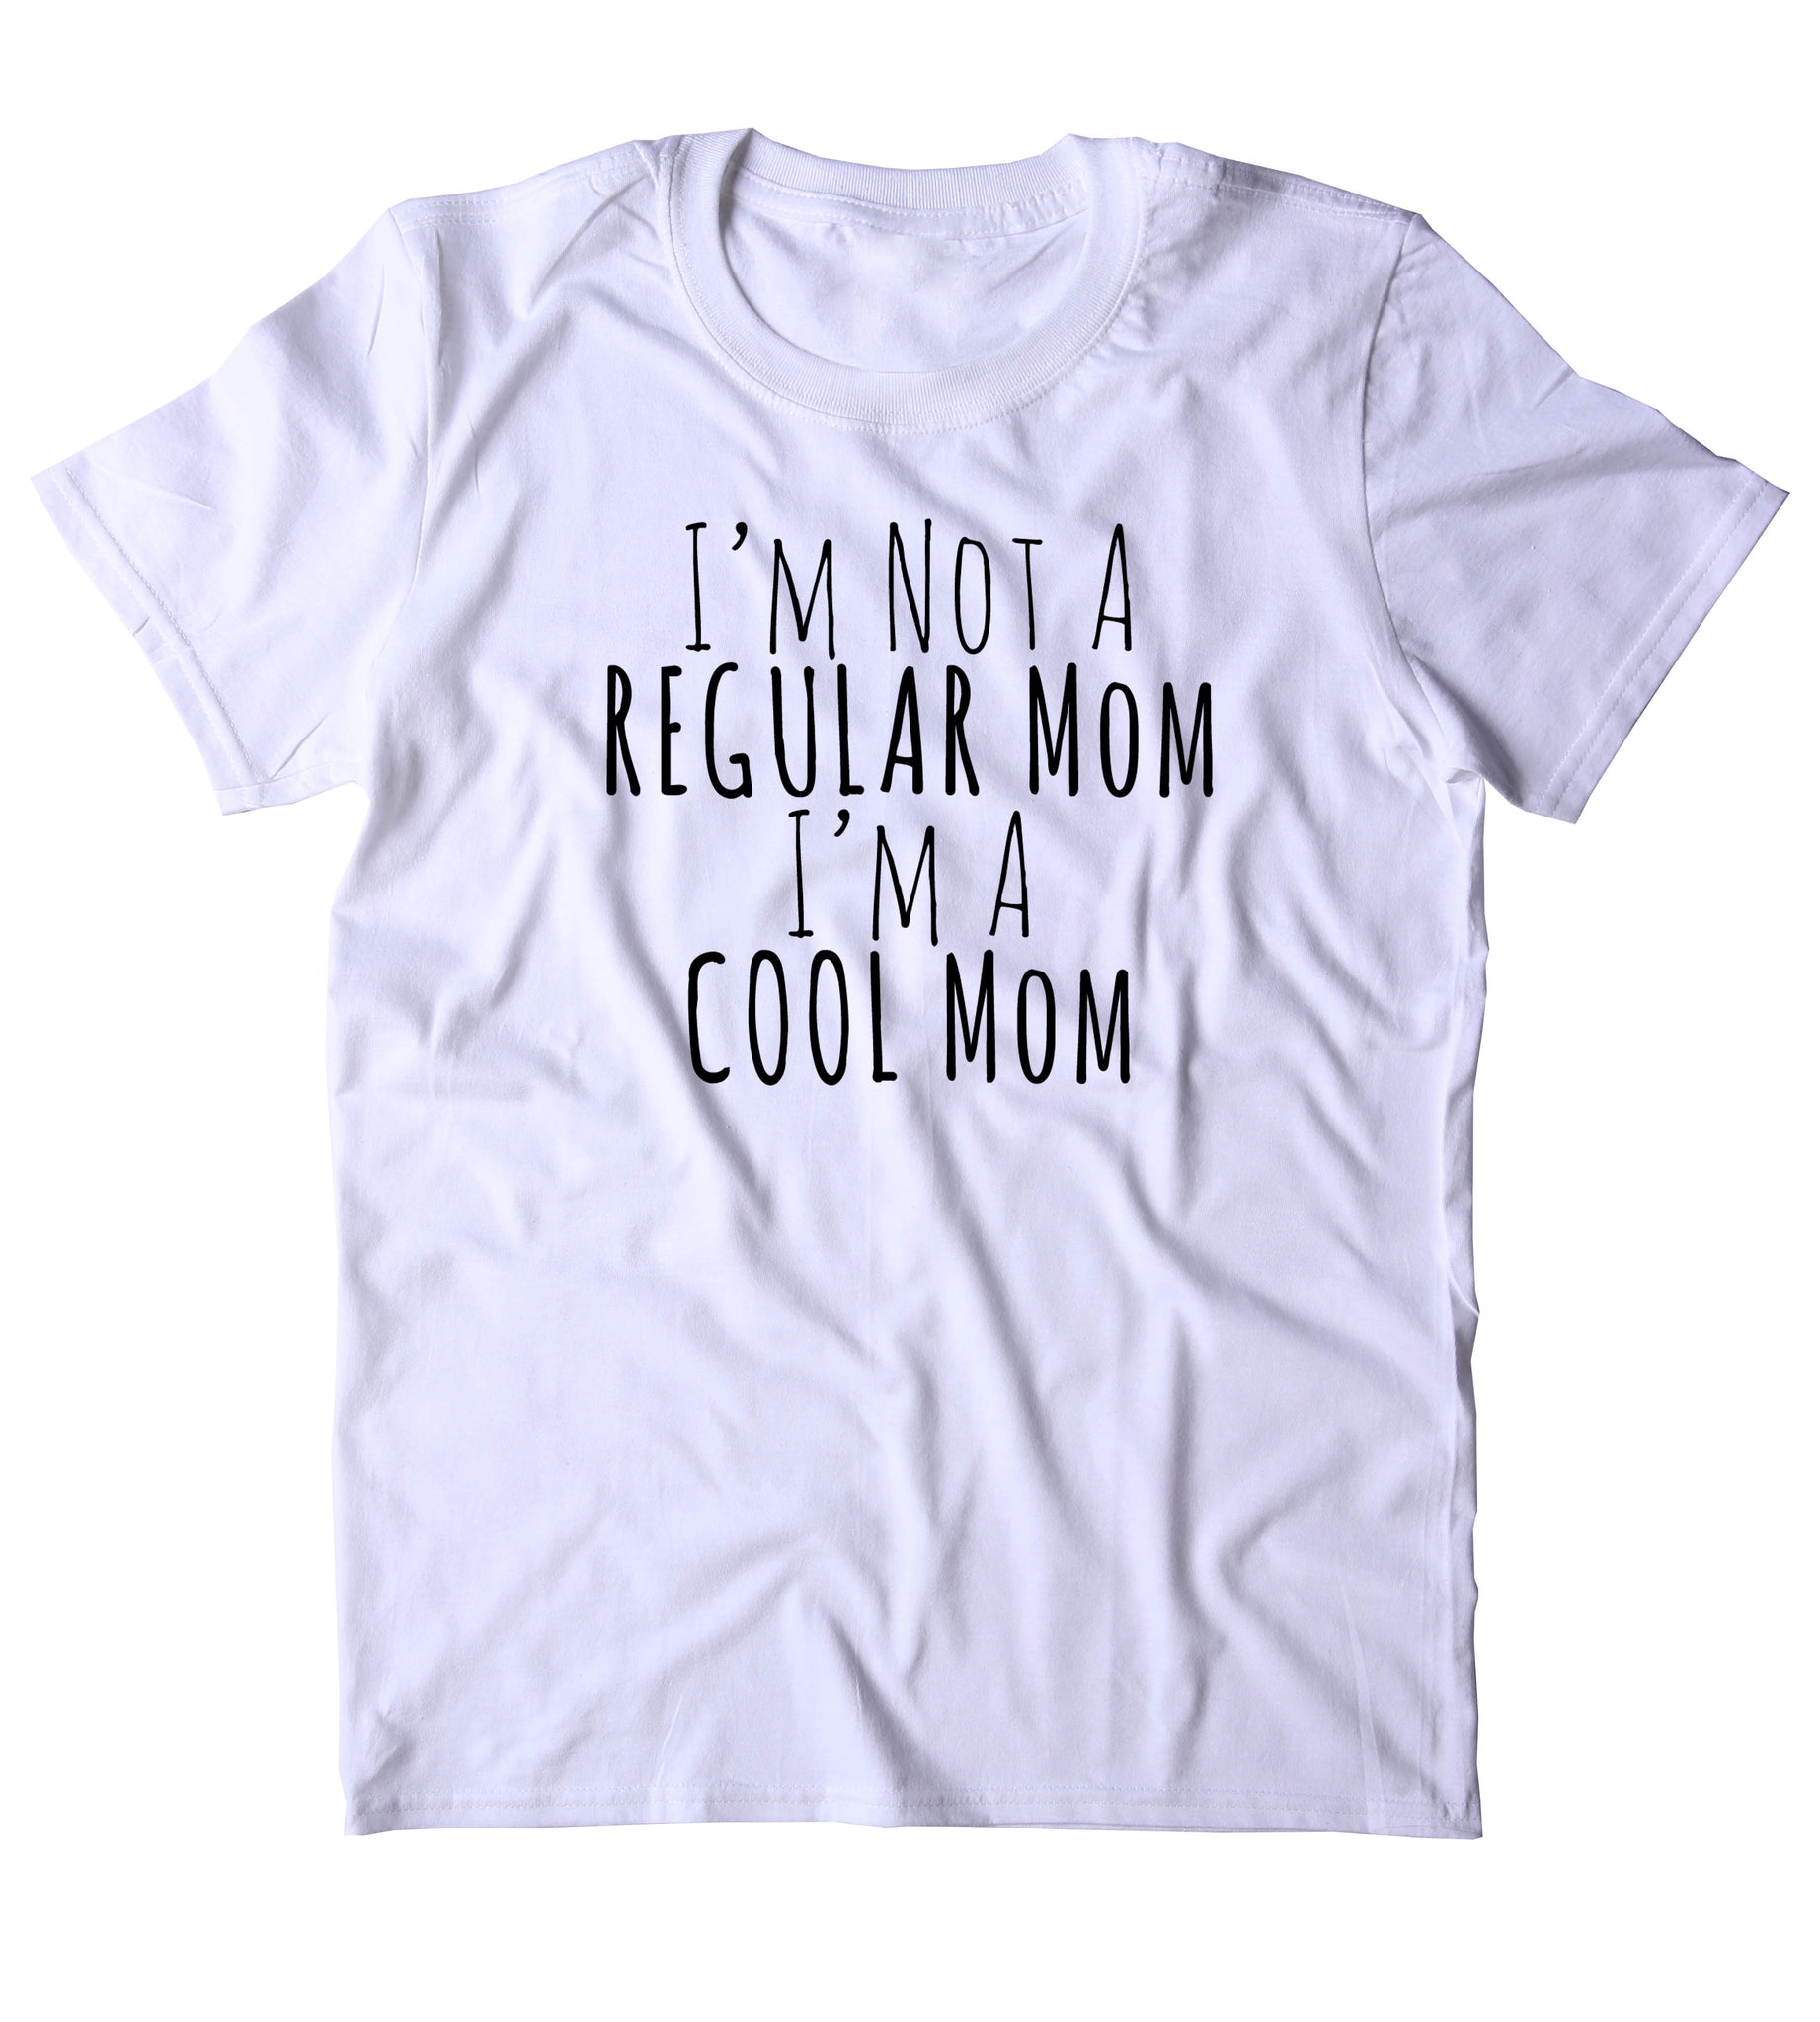 i'm a cool mom shirt